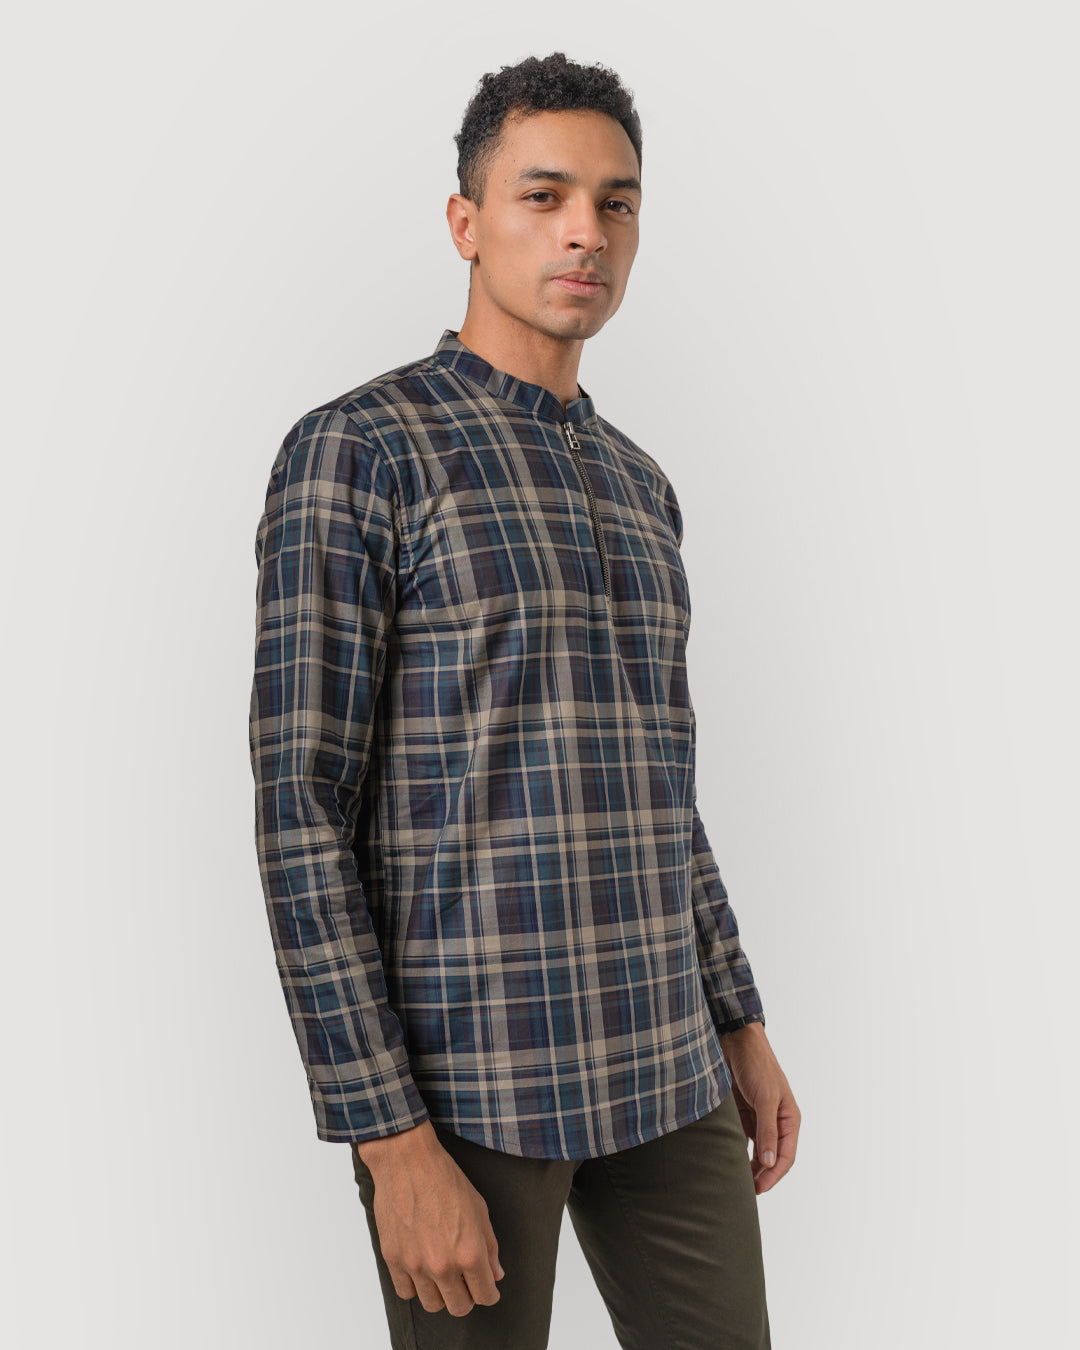 Modern stylish zipper front shirt for men, Stylish and functional zipper front shirt for men, combining modern design with comfort, casual wear